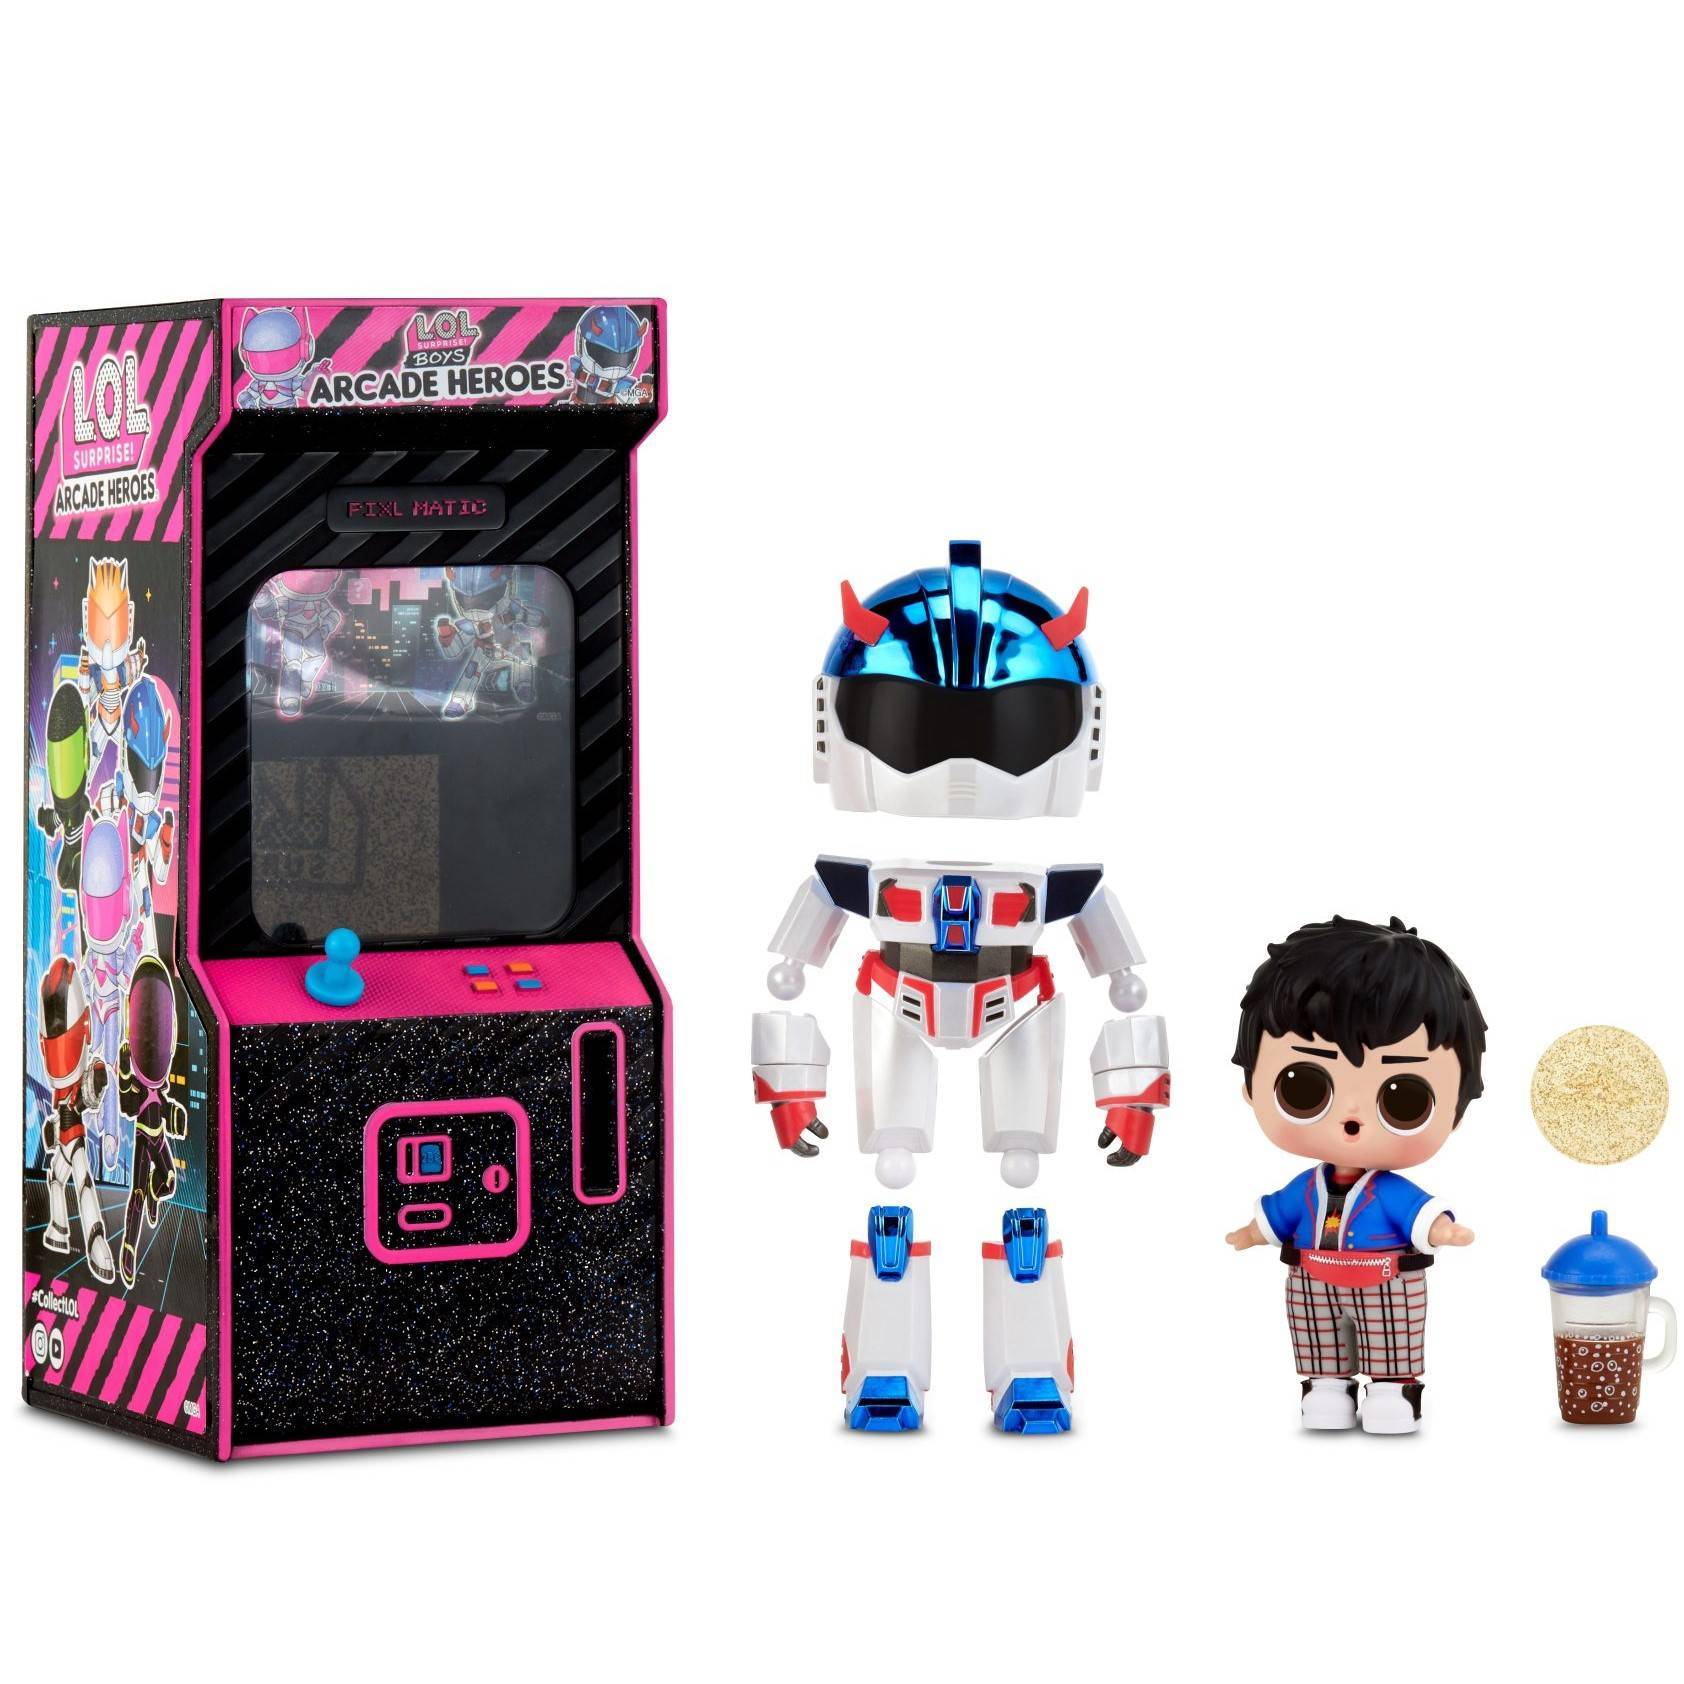 Купить L.O.L. Surprise Кукла Arcade Heroes, Fan Boy 569367/3,